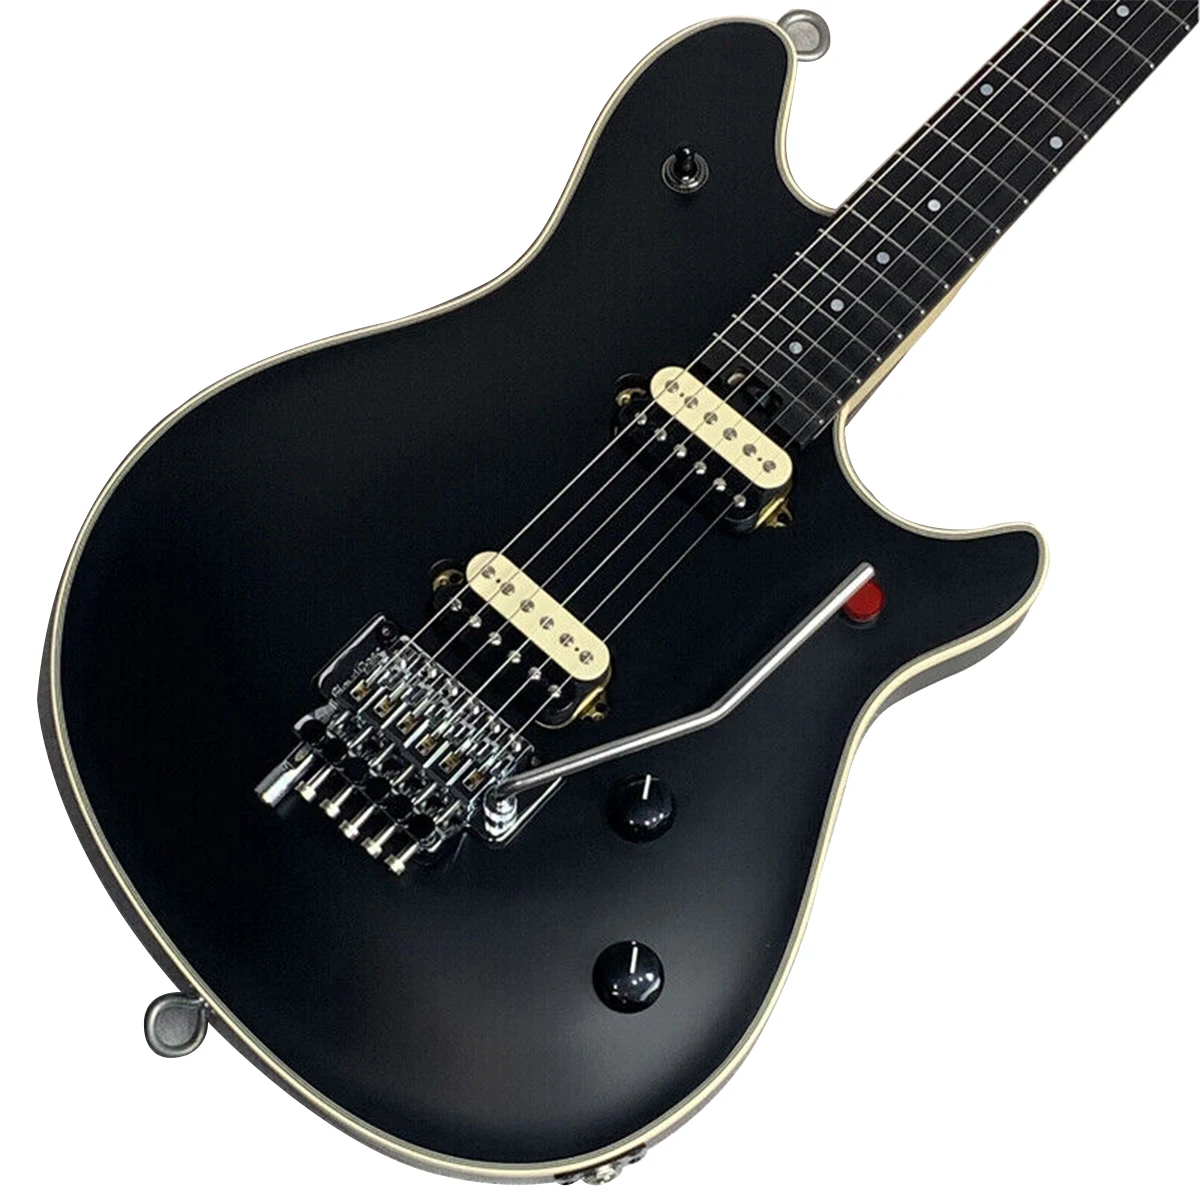 

USA E Halen Signature Stealth Black Guitar